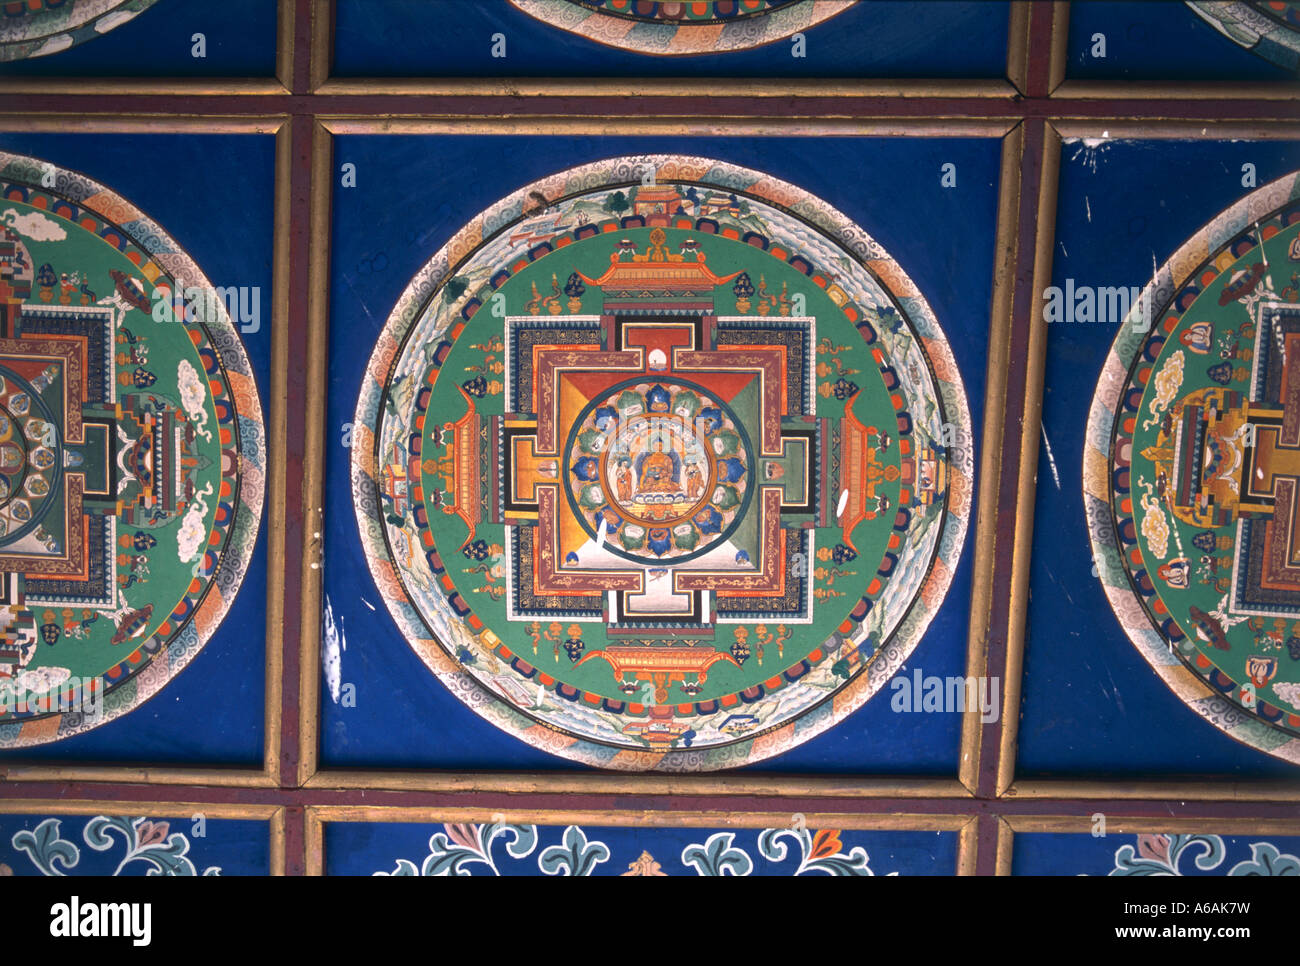 La Chine, Tibet, Lhassa, mandala symbolisant l'univers peint de façon complexe Banque D'Images